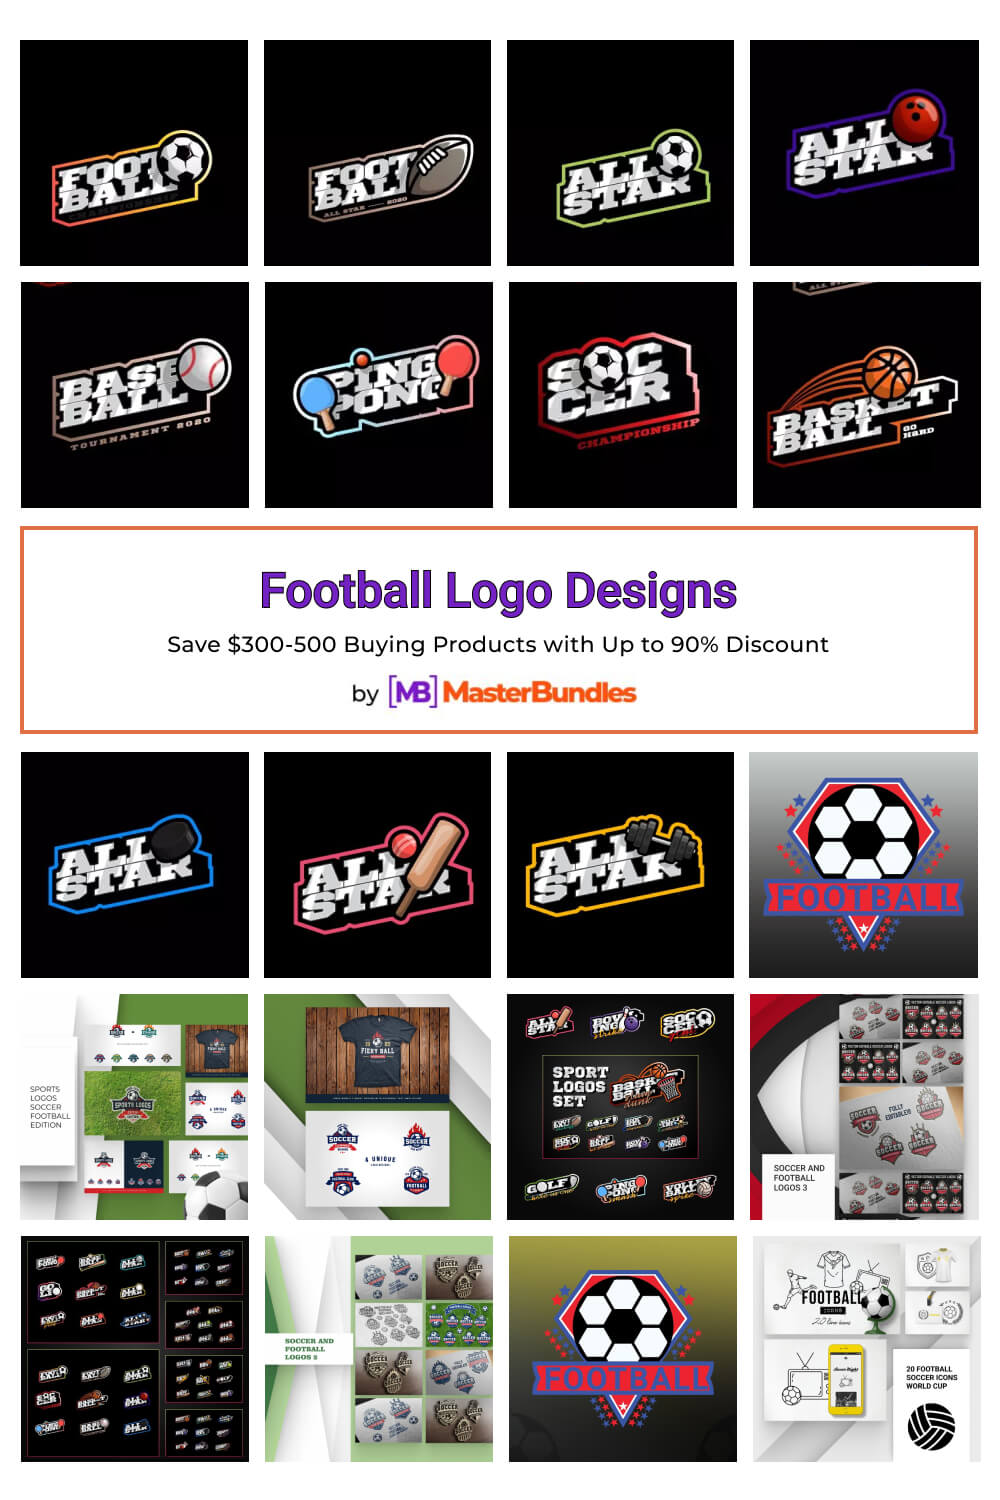 football logo designs pinterest image.